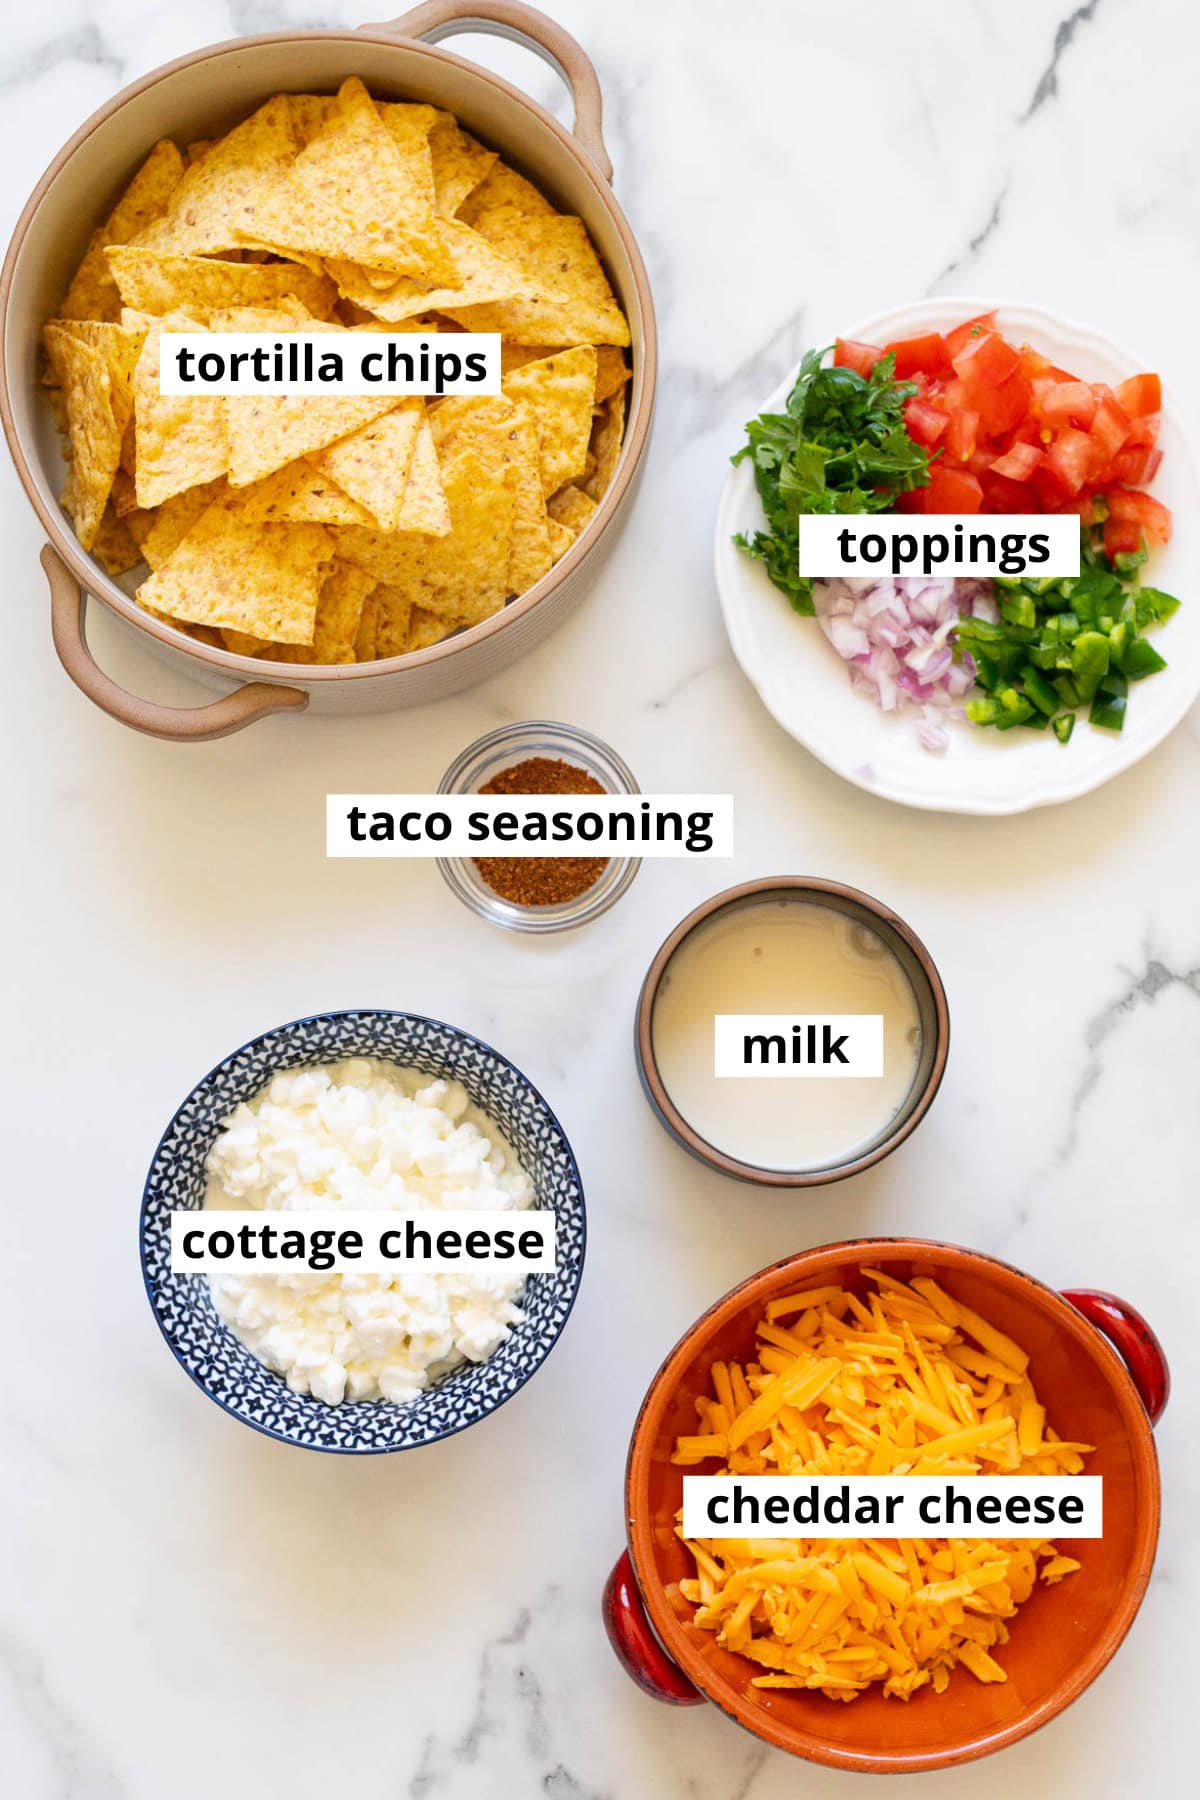 Tortilla chips, cottage cheese, taco seasoning, milk, red onion, jalapeno, cilantro, tomato.